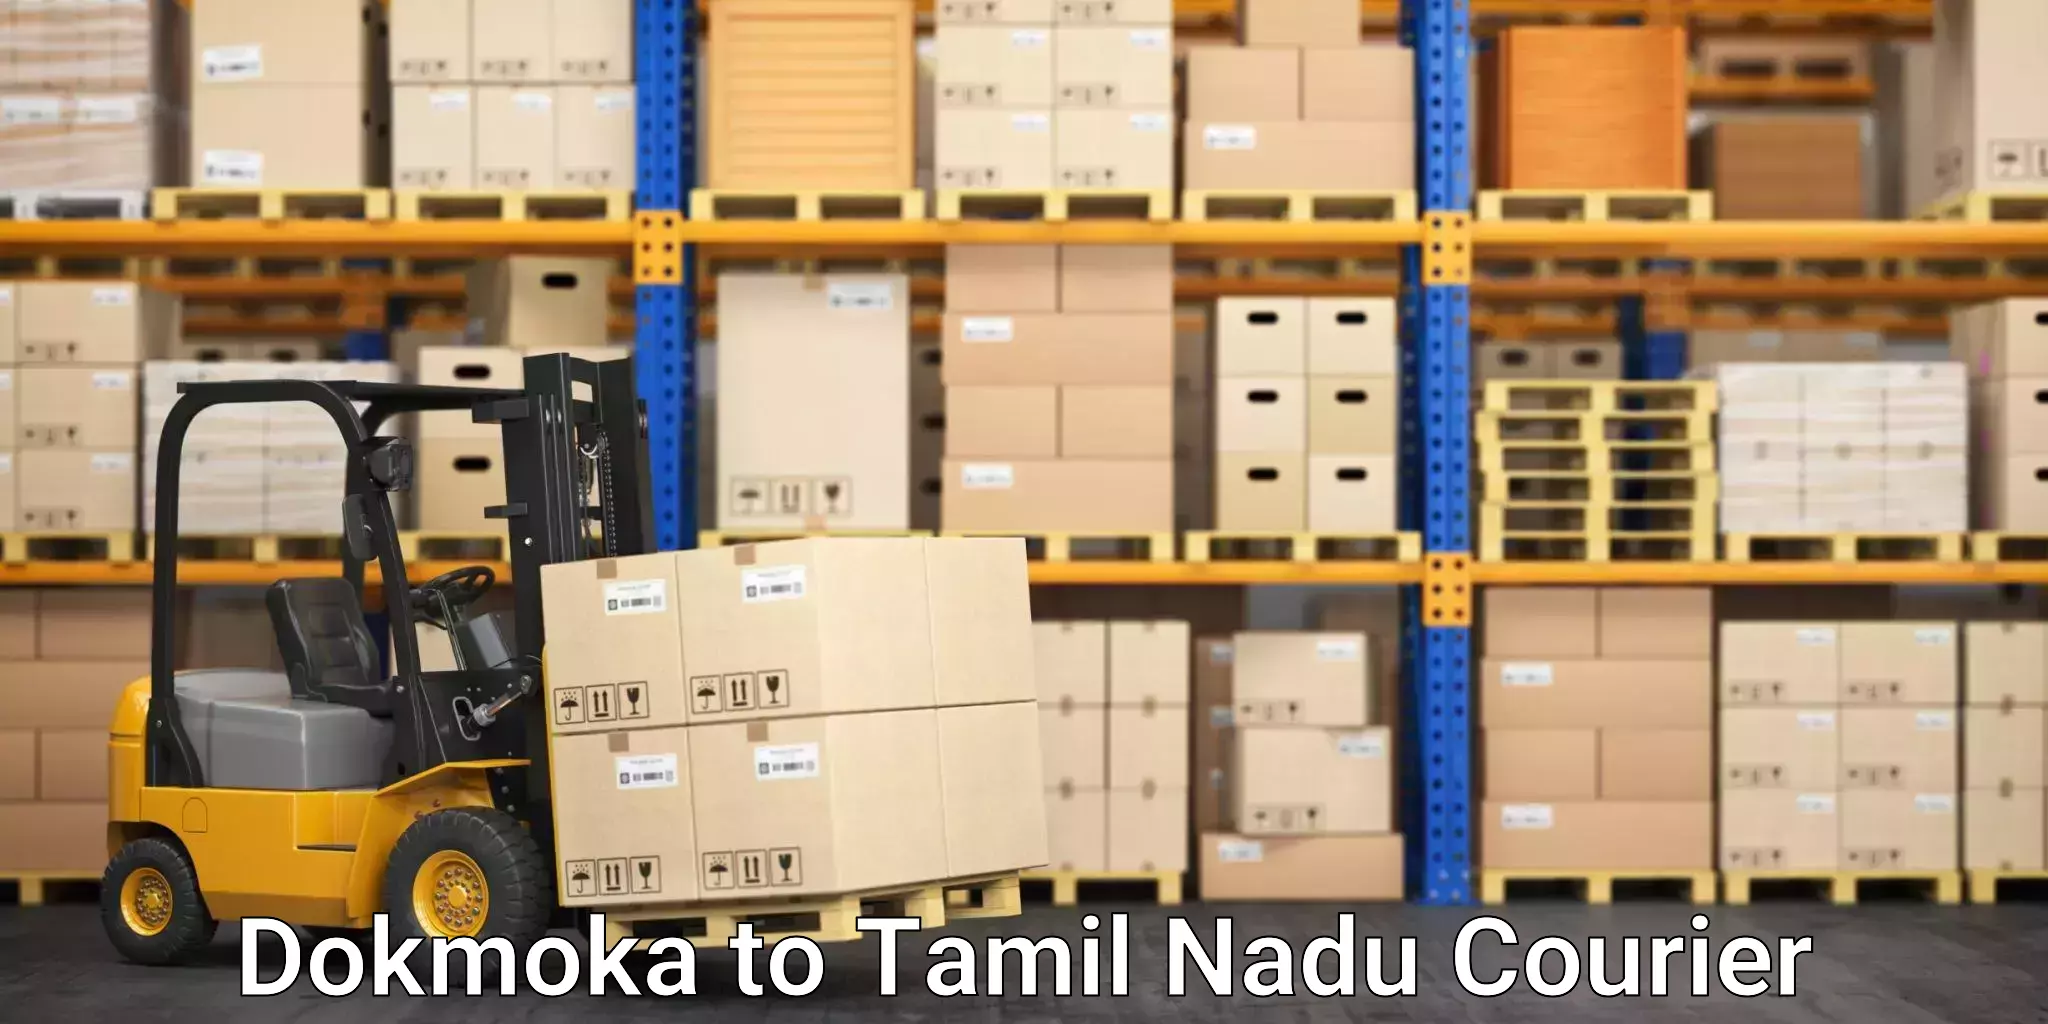 Package delivery network Dokmoka to Anna University Chennai